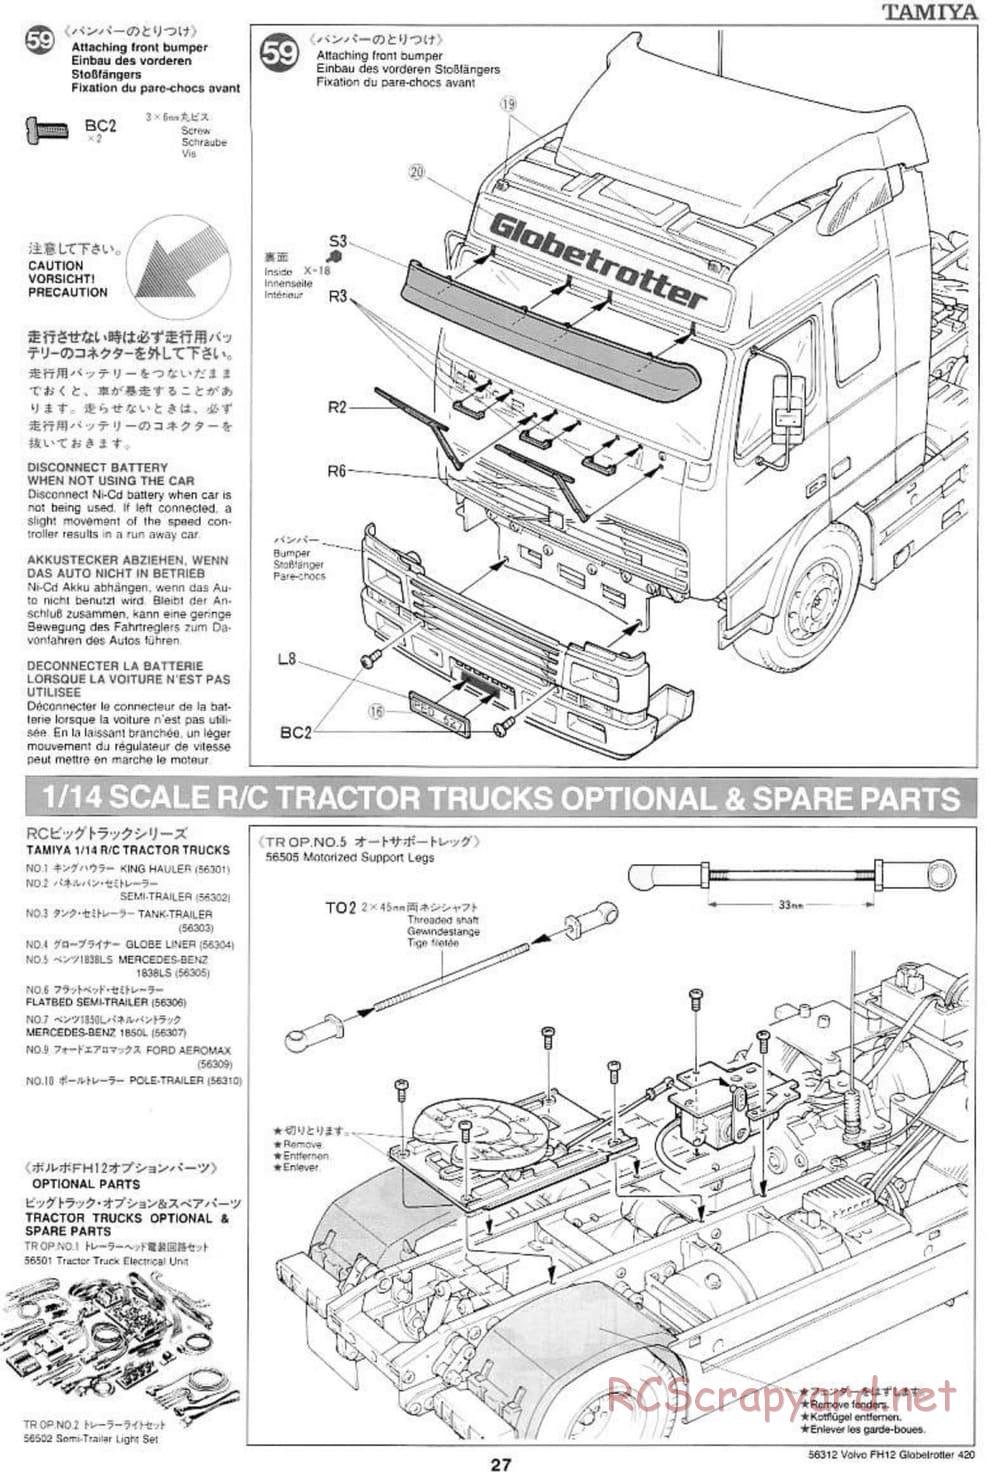 Tamiya - Volvo FH12 Globetrotter 420 - Manual - Page 27